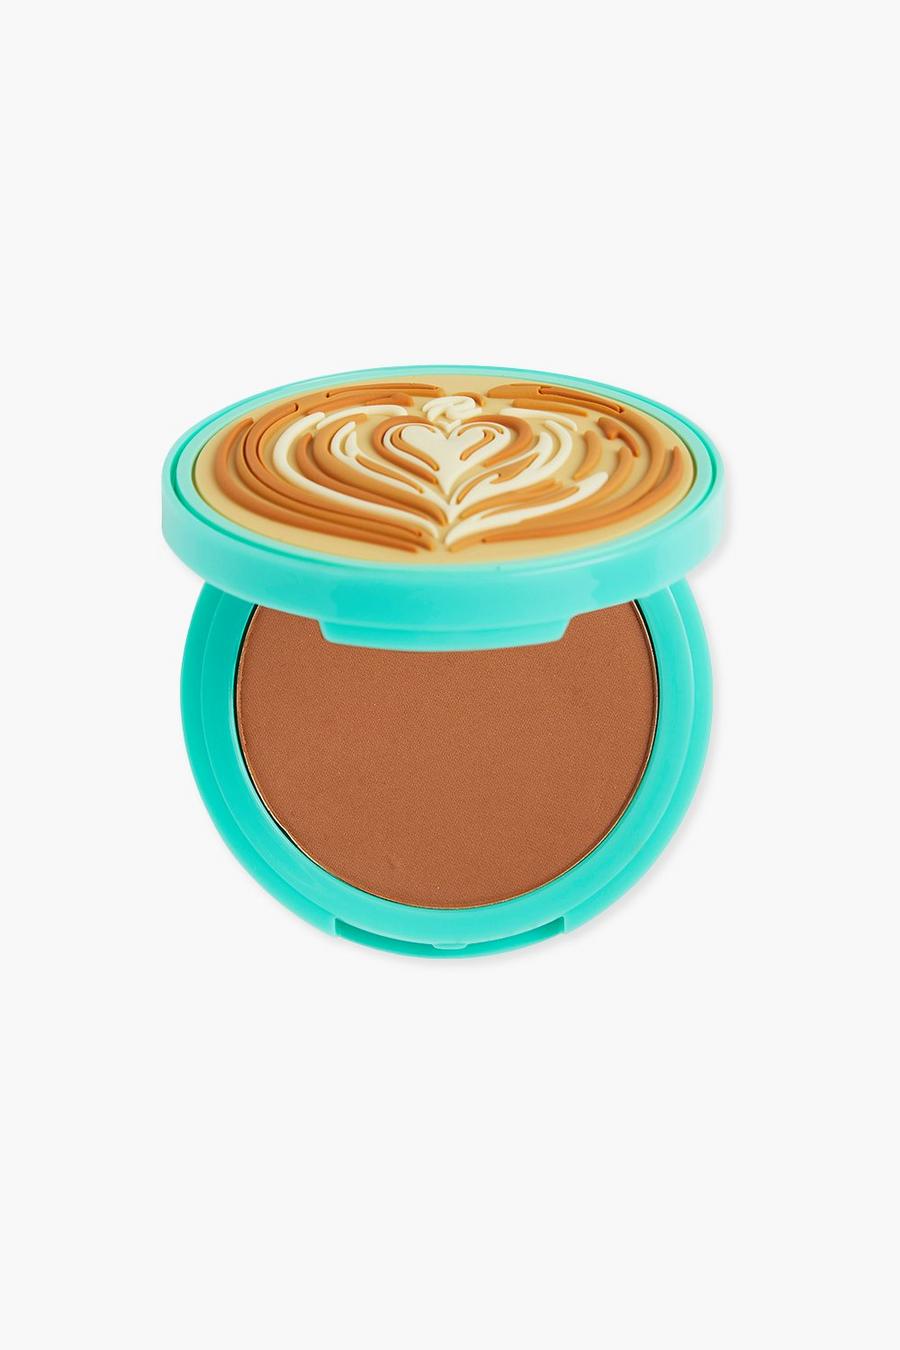 I Heart Revolution - Bronzer - Tasty Coffee, Latte